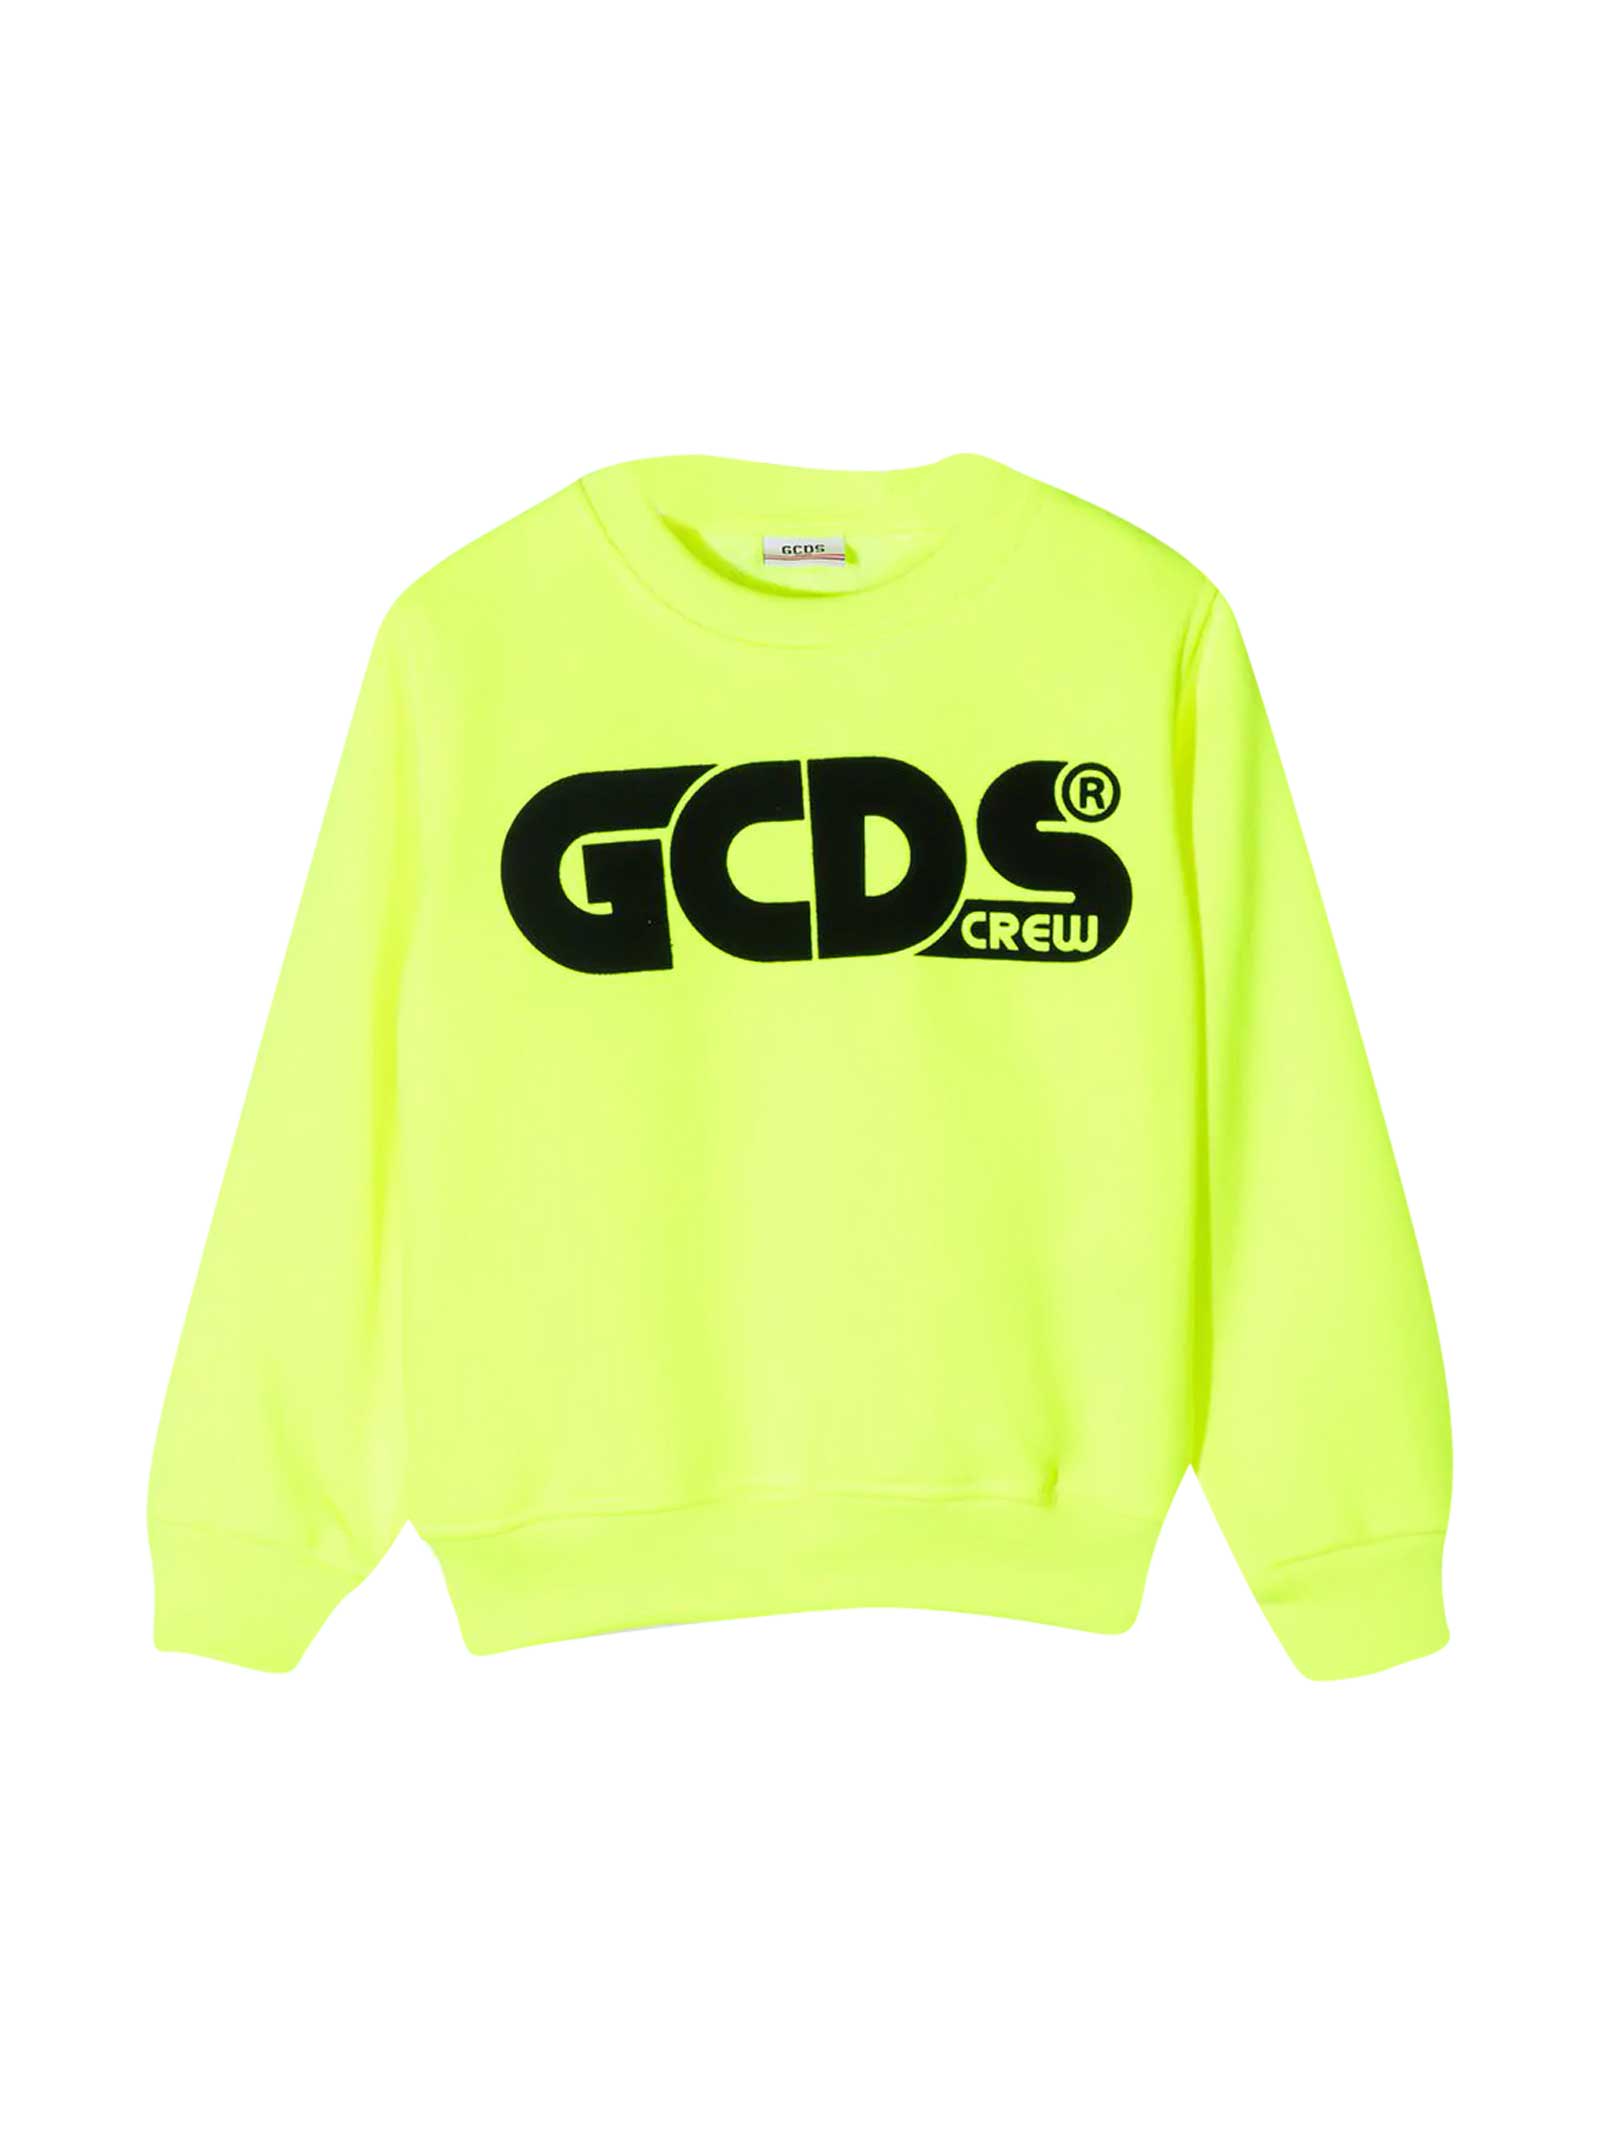 GCDS Mini Yellow Sweatshirt Diadora Junior Fluo